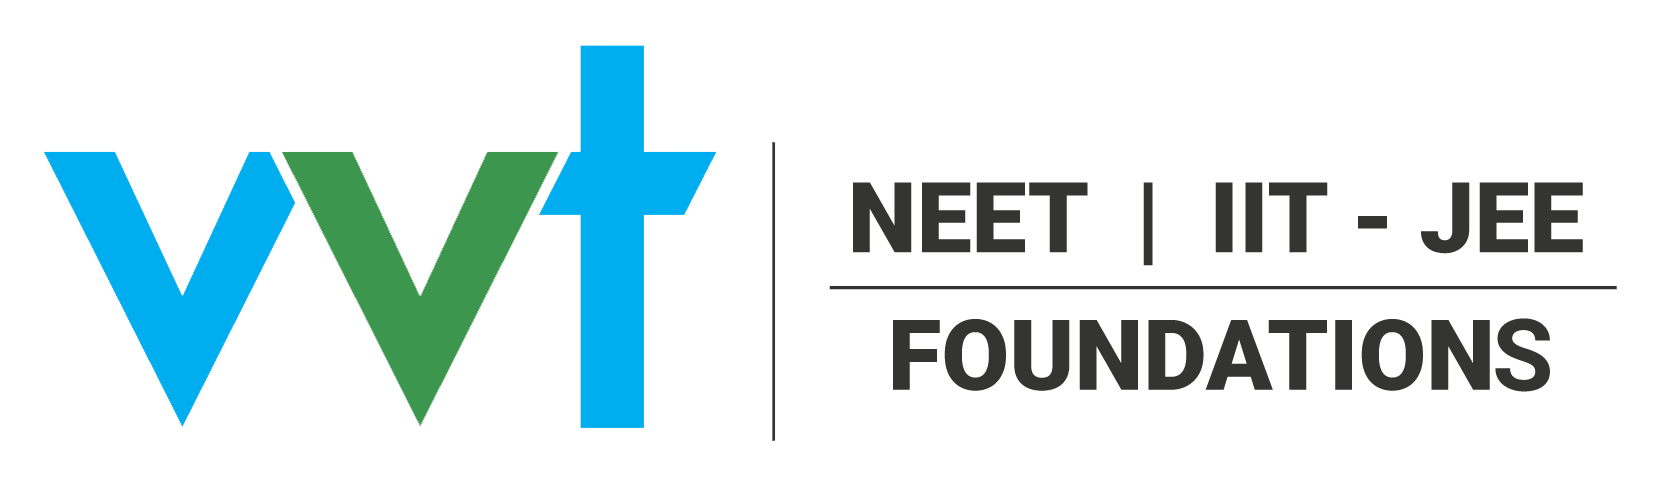 VVT NEET IIT-JEE Foundations Logo